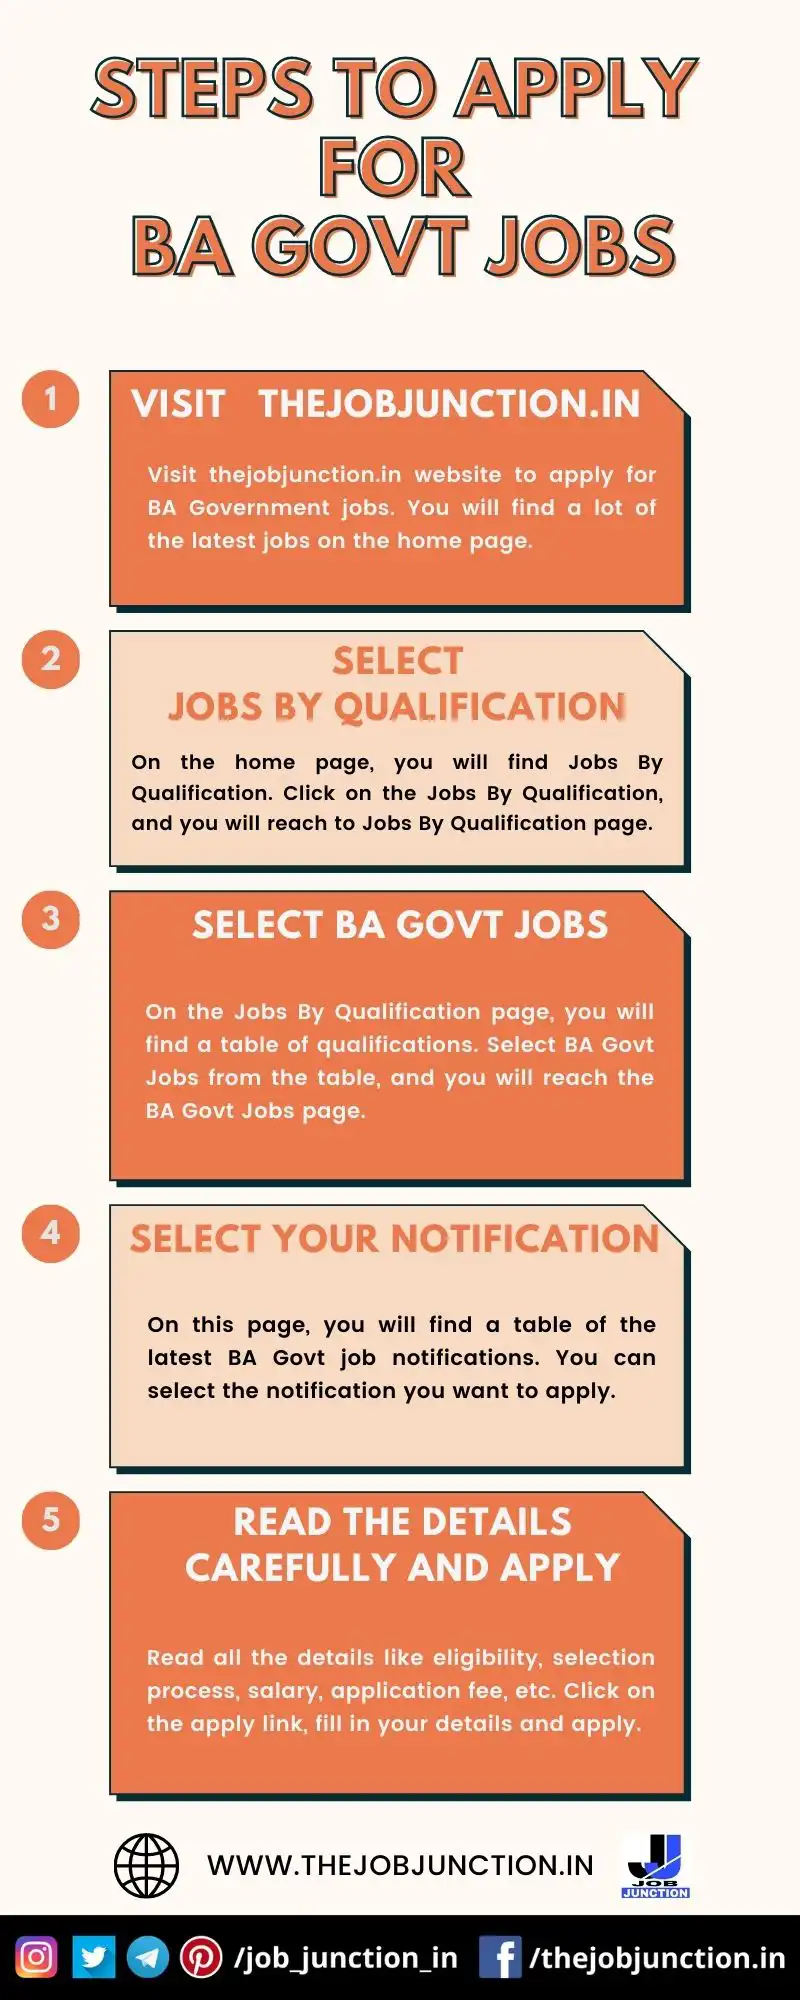 STEPS TO APPLY FOR BA GOVT JOBS